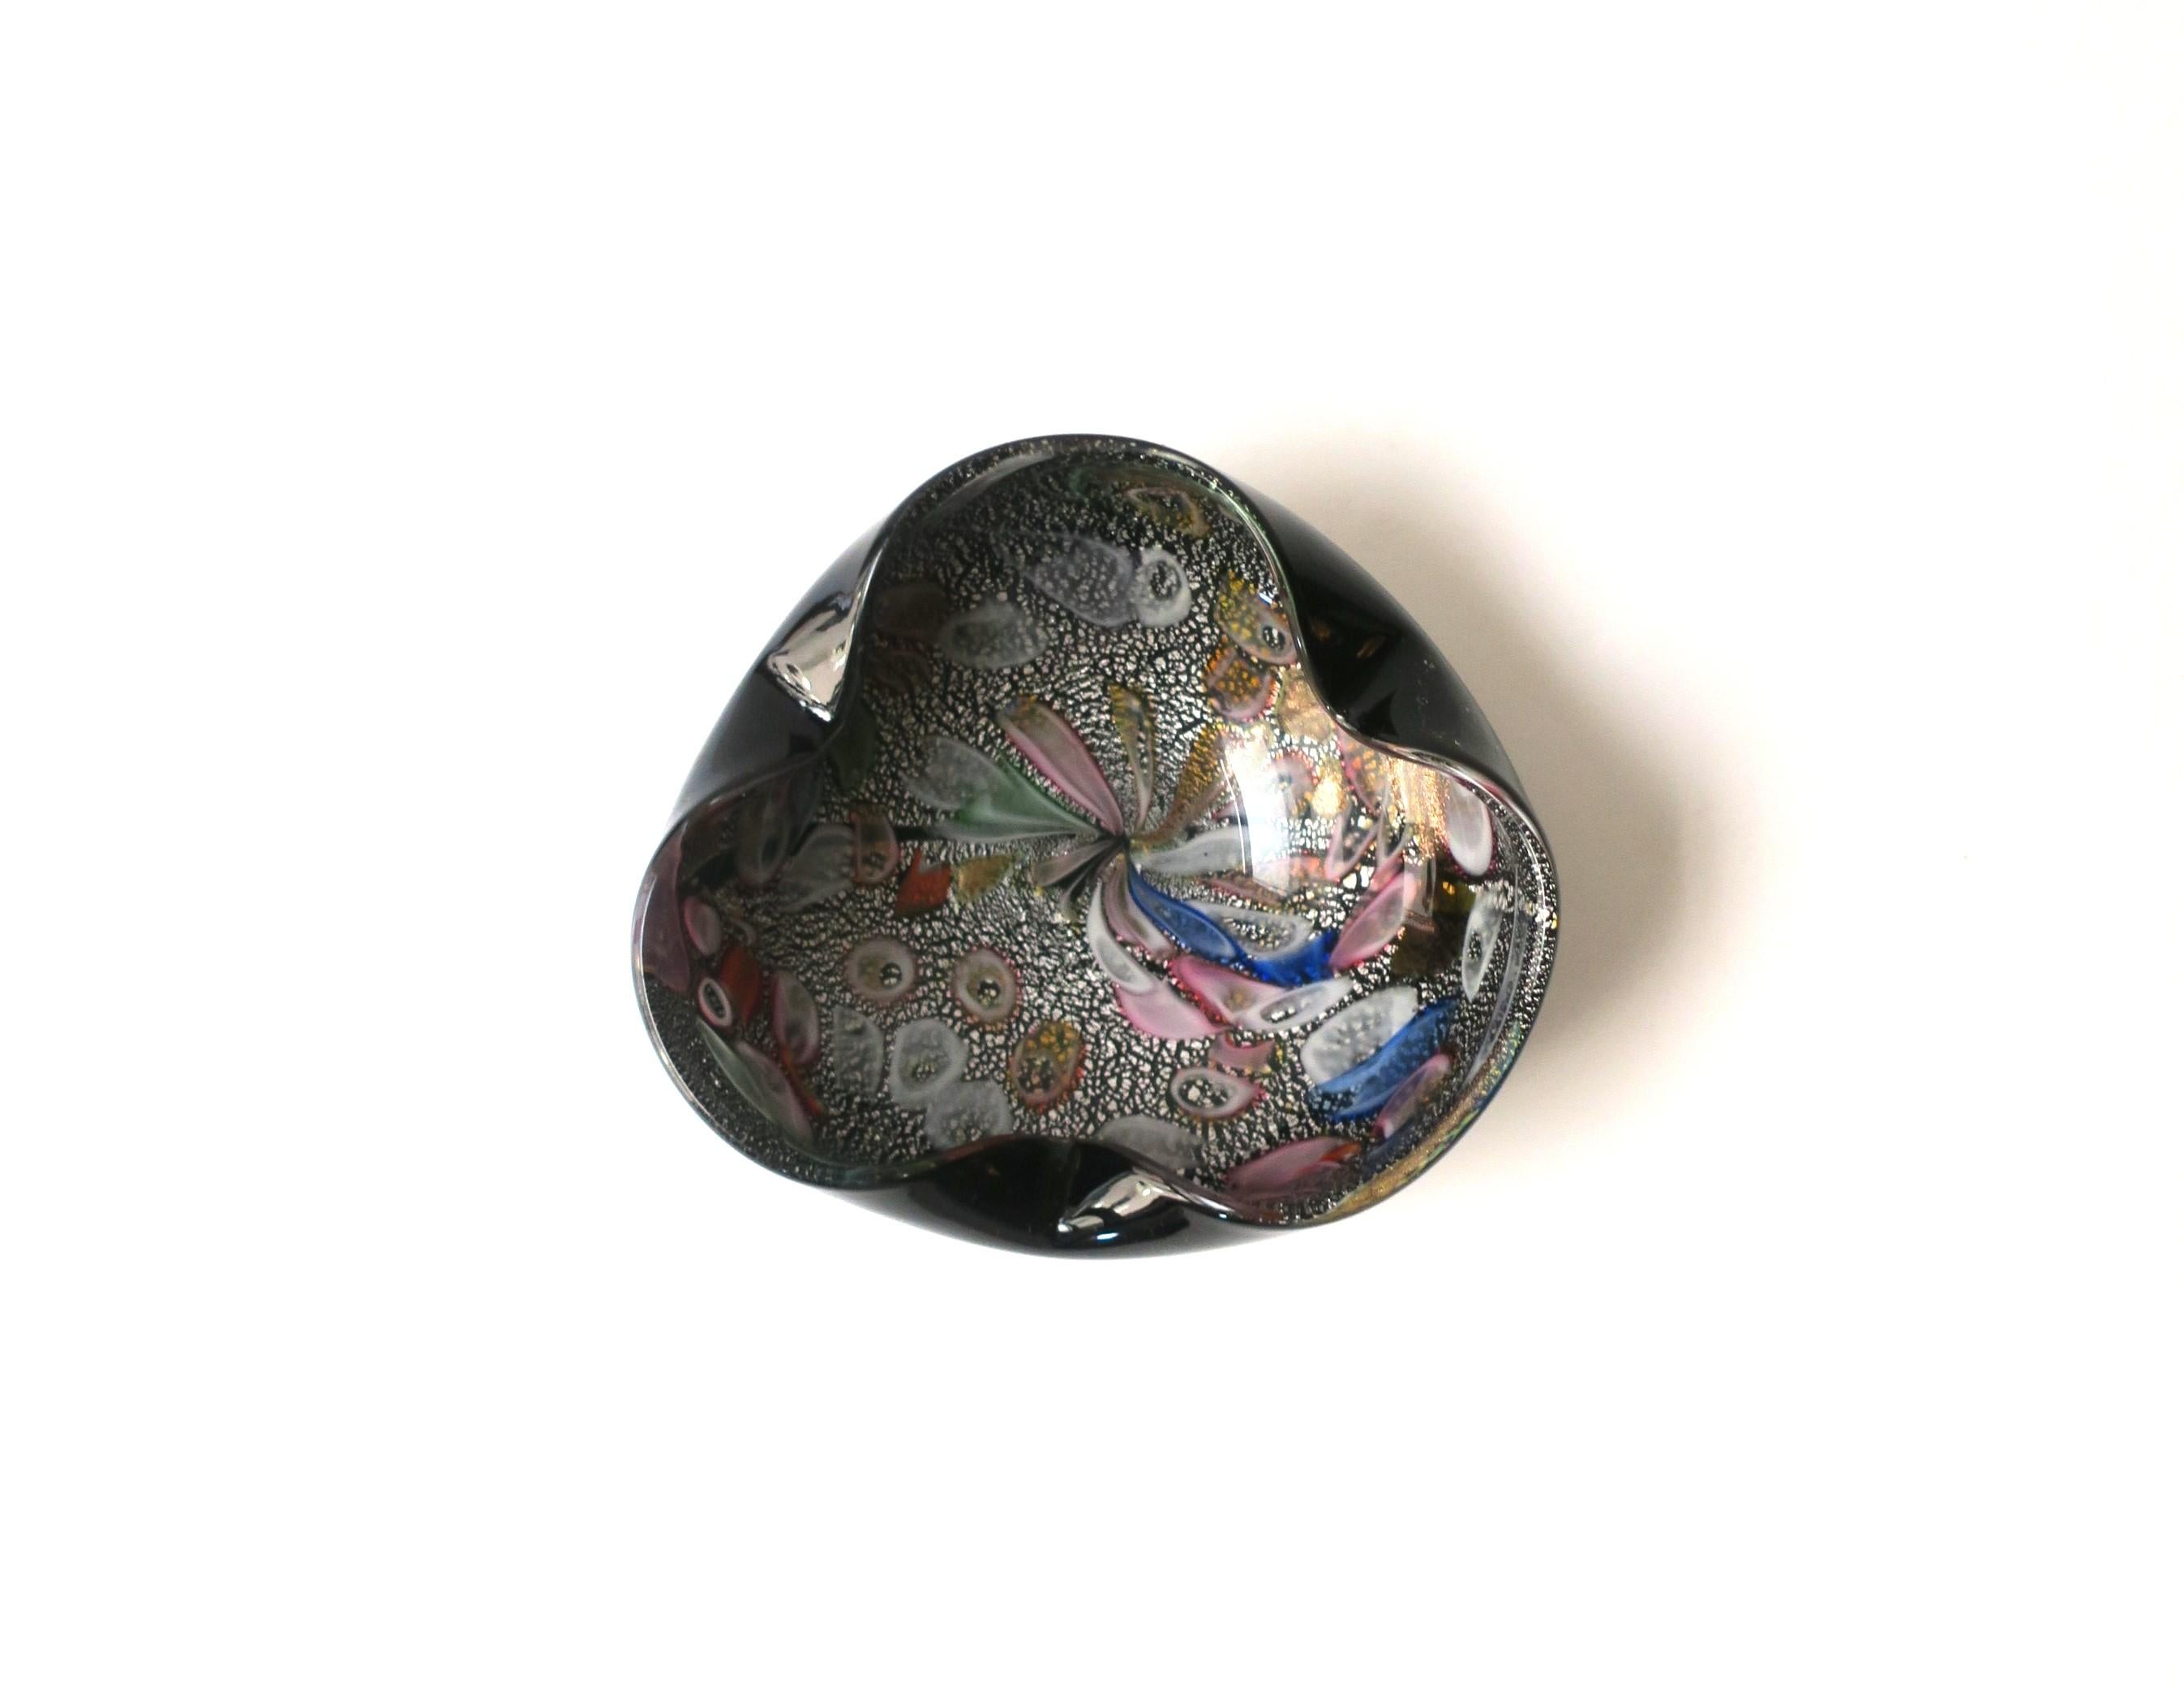 A beautiful Italian Murano art glass bowl, attributed to Dino Martens and Arte Vetraria Muranese, Mid-Century Modern design period, circa mid-20th century, Italy, 1950s-1960s. Bowl is beautifully designed with colorful millefiori and generous